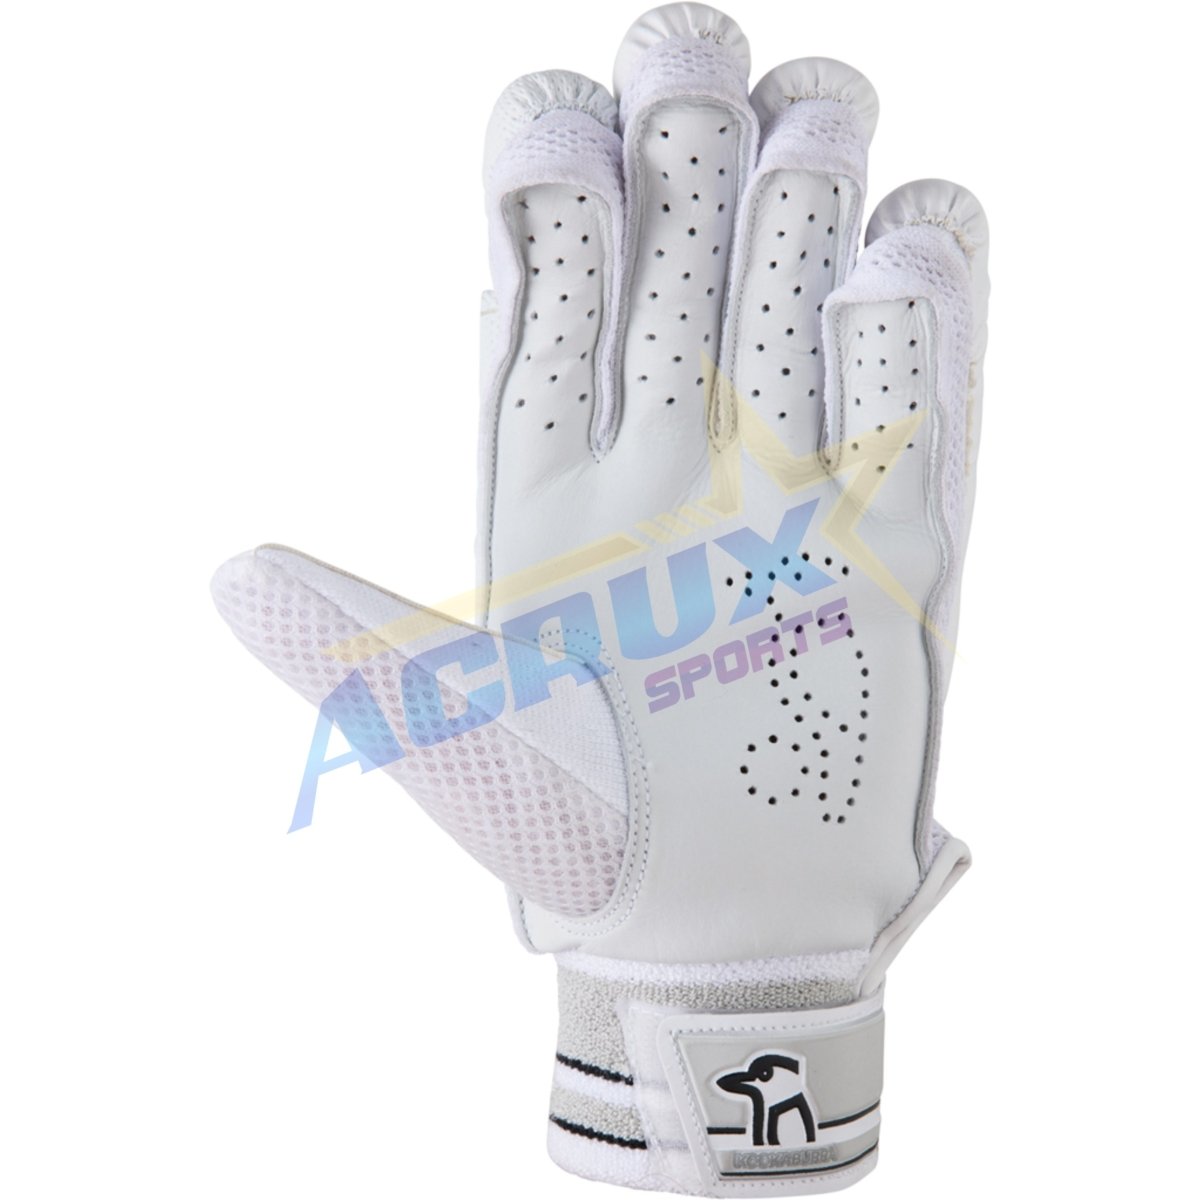 Kookaburra Ghost Pro 6.0 Cricket Batting Gloves.